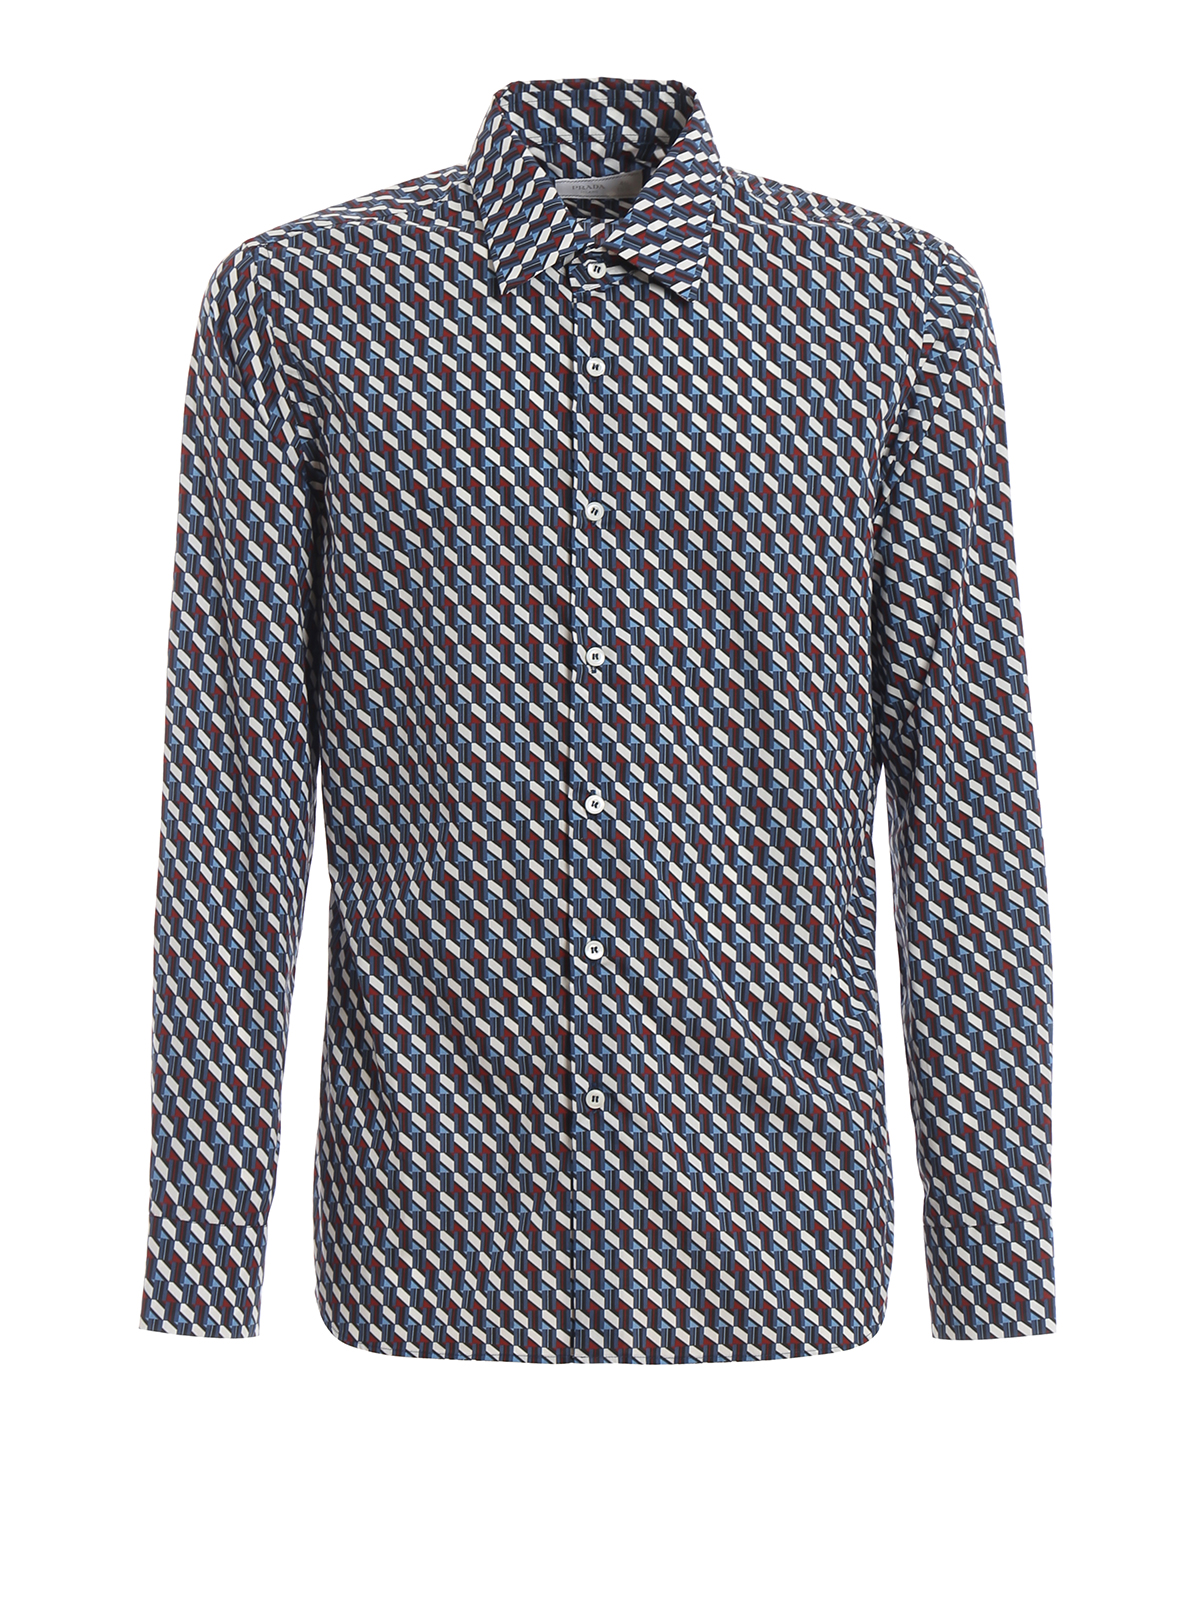 Prada Geometric Patterned Poplin Shirt In Blue